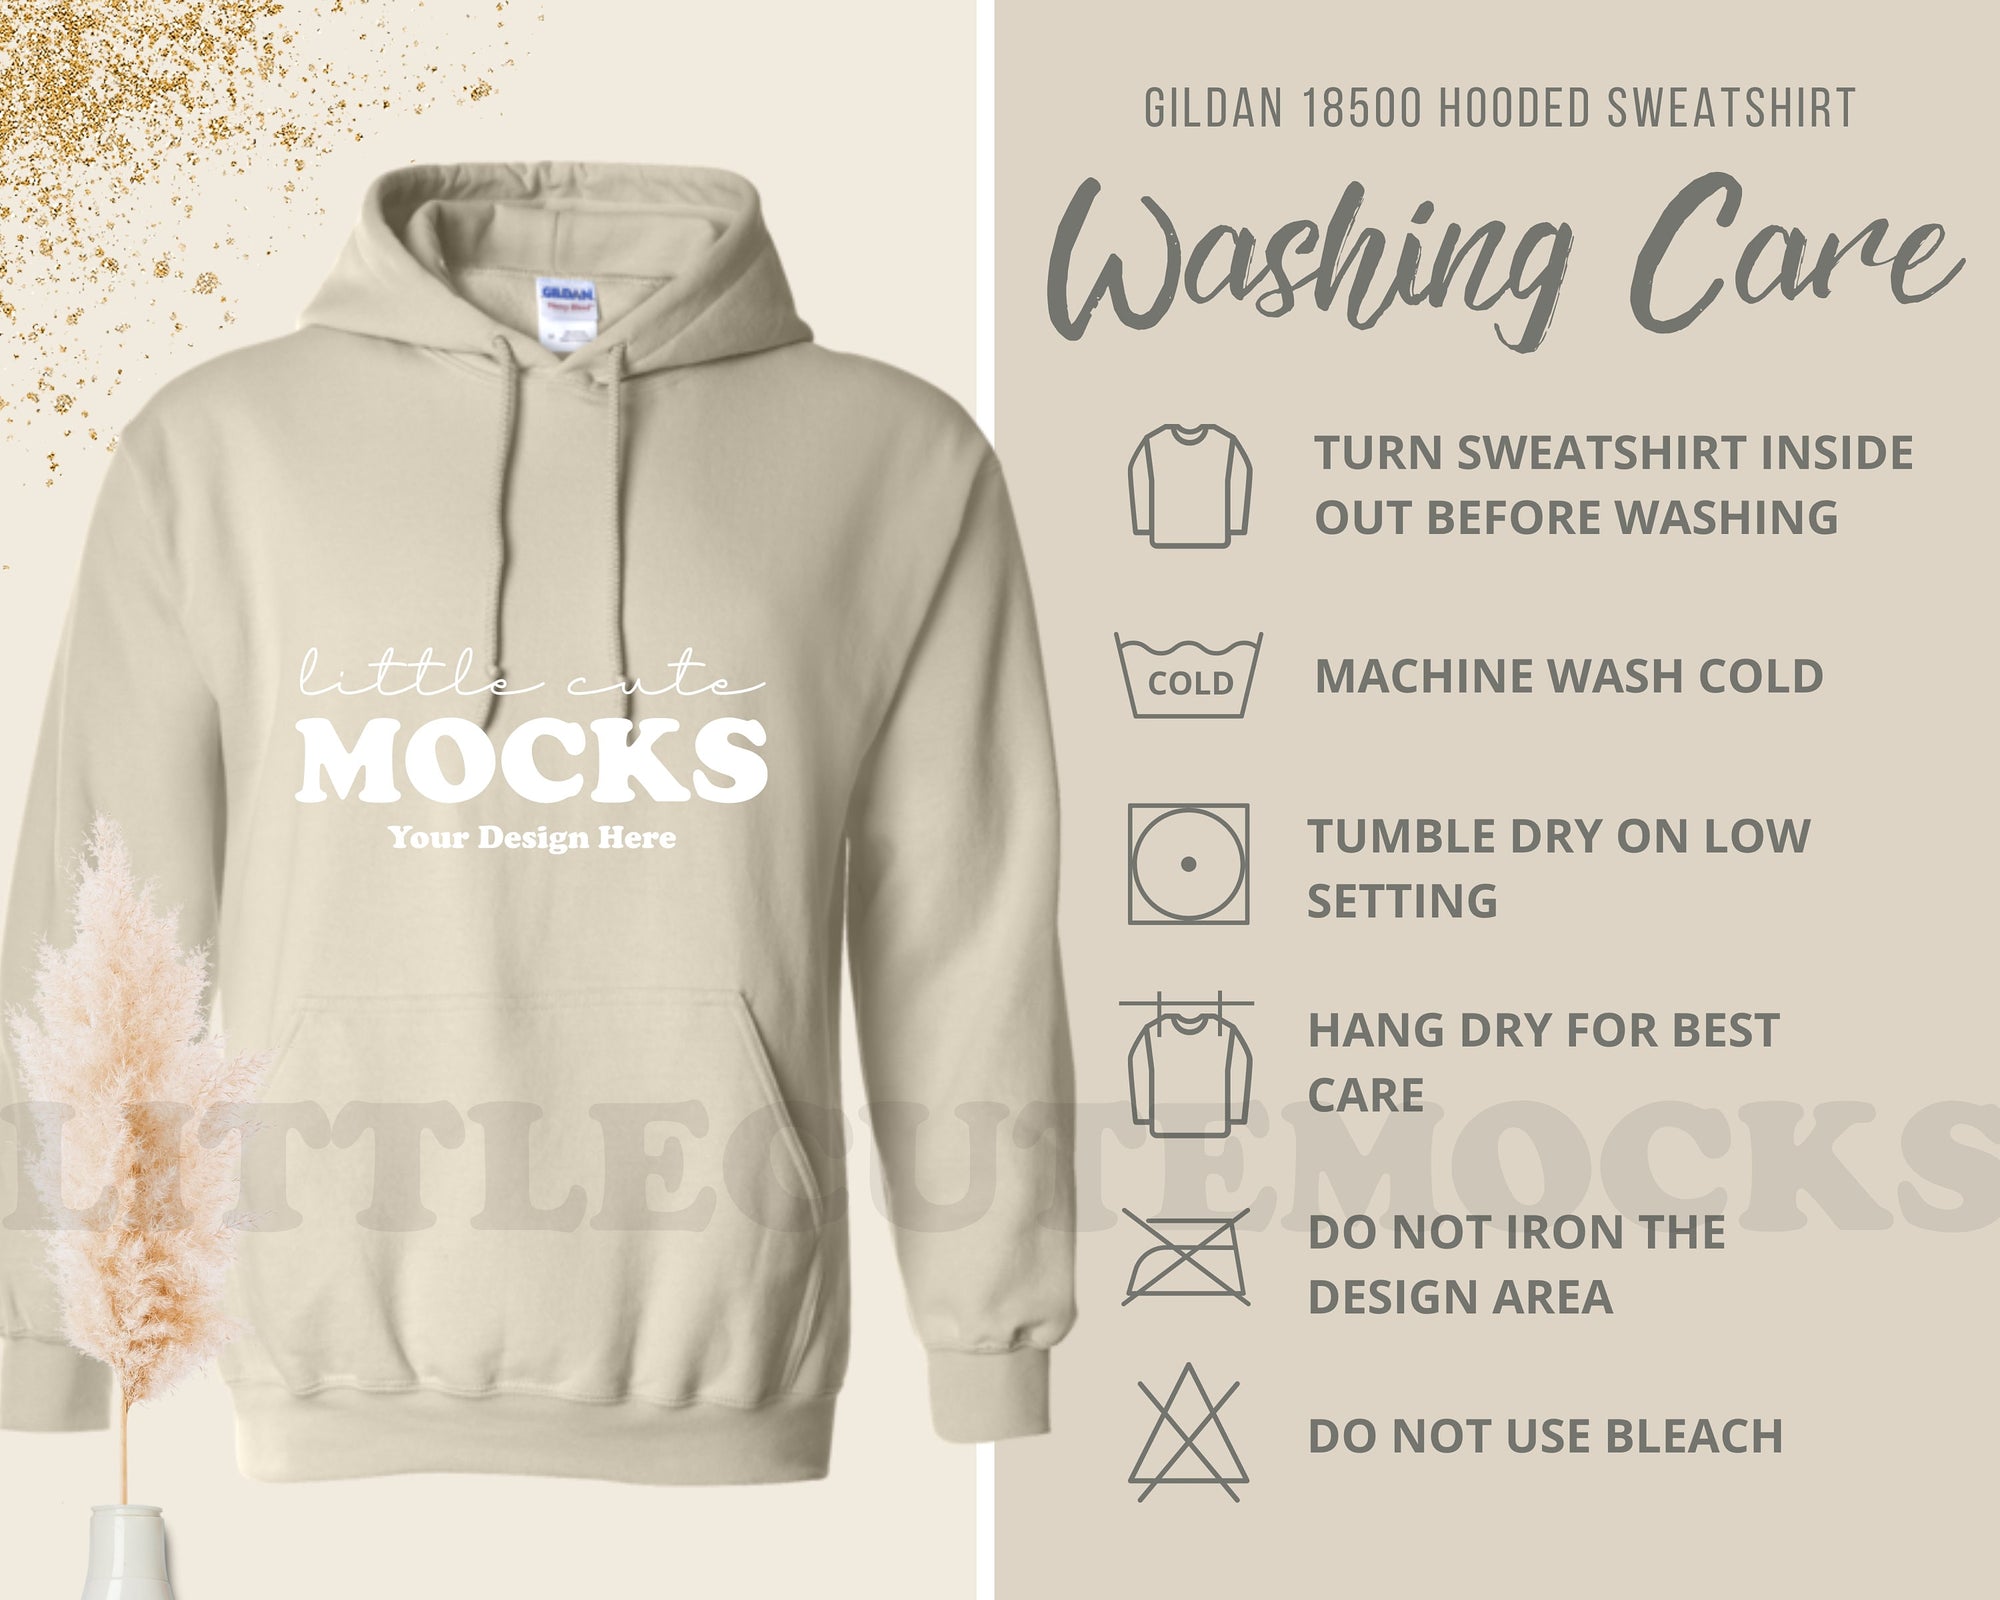 How To Wash Gildan Heavy Blend Sweatshirt?